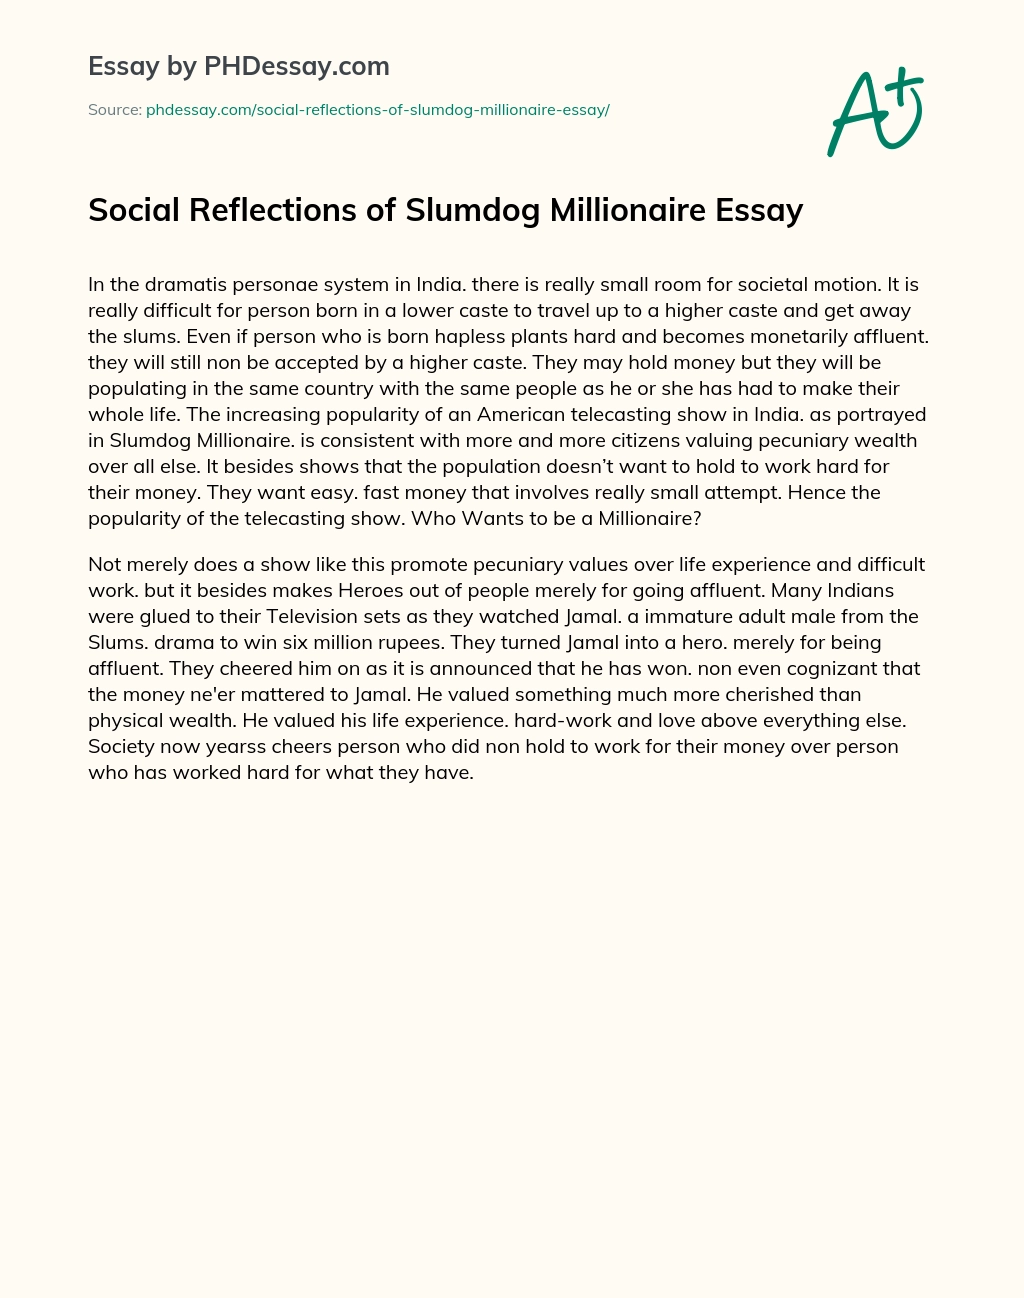 Social Reflections of Slumdog Millionaire essay